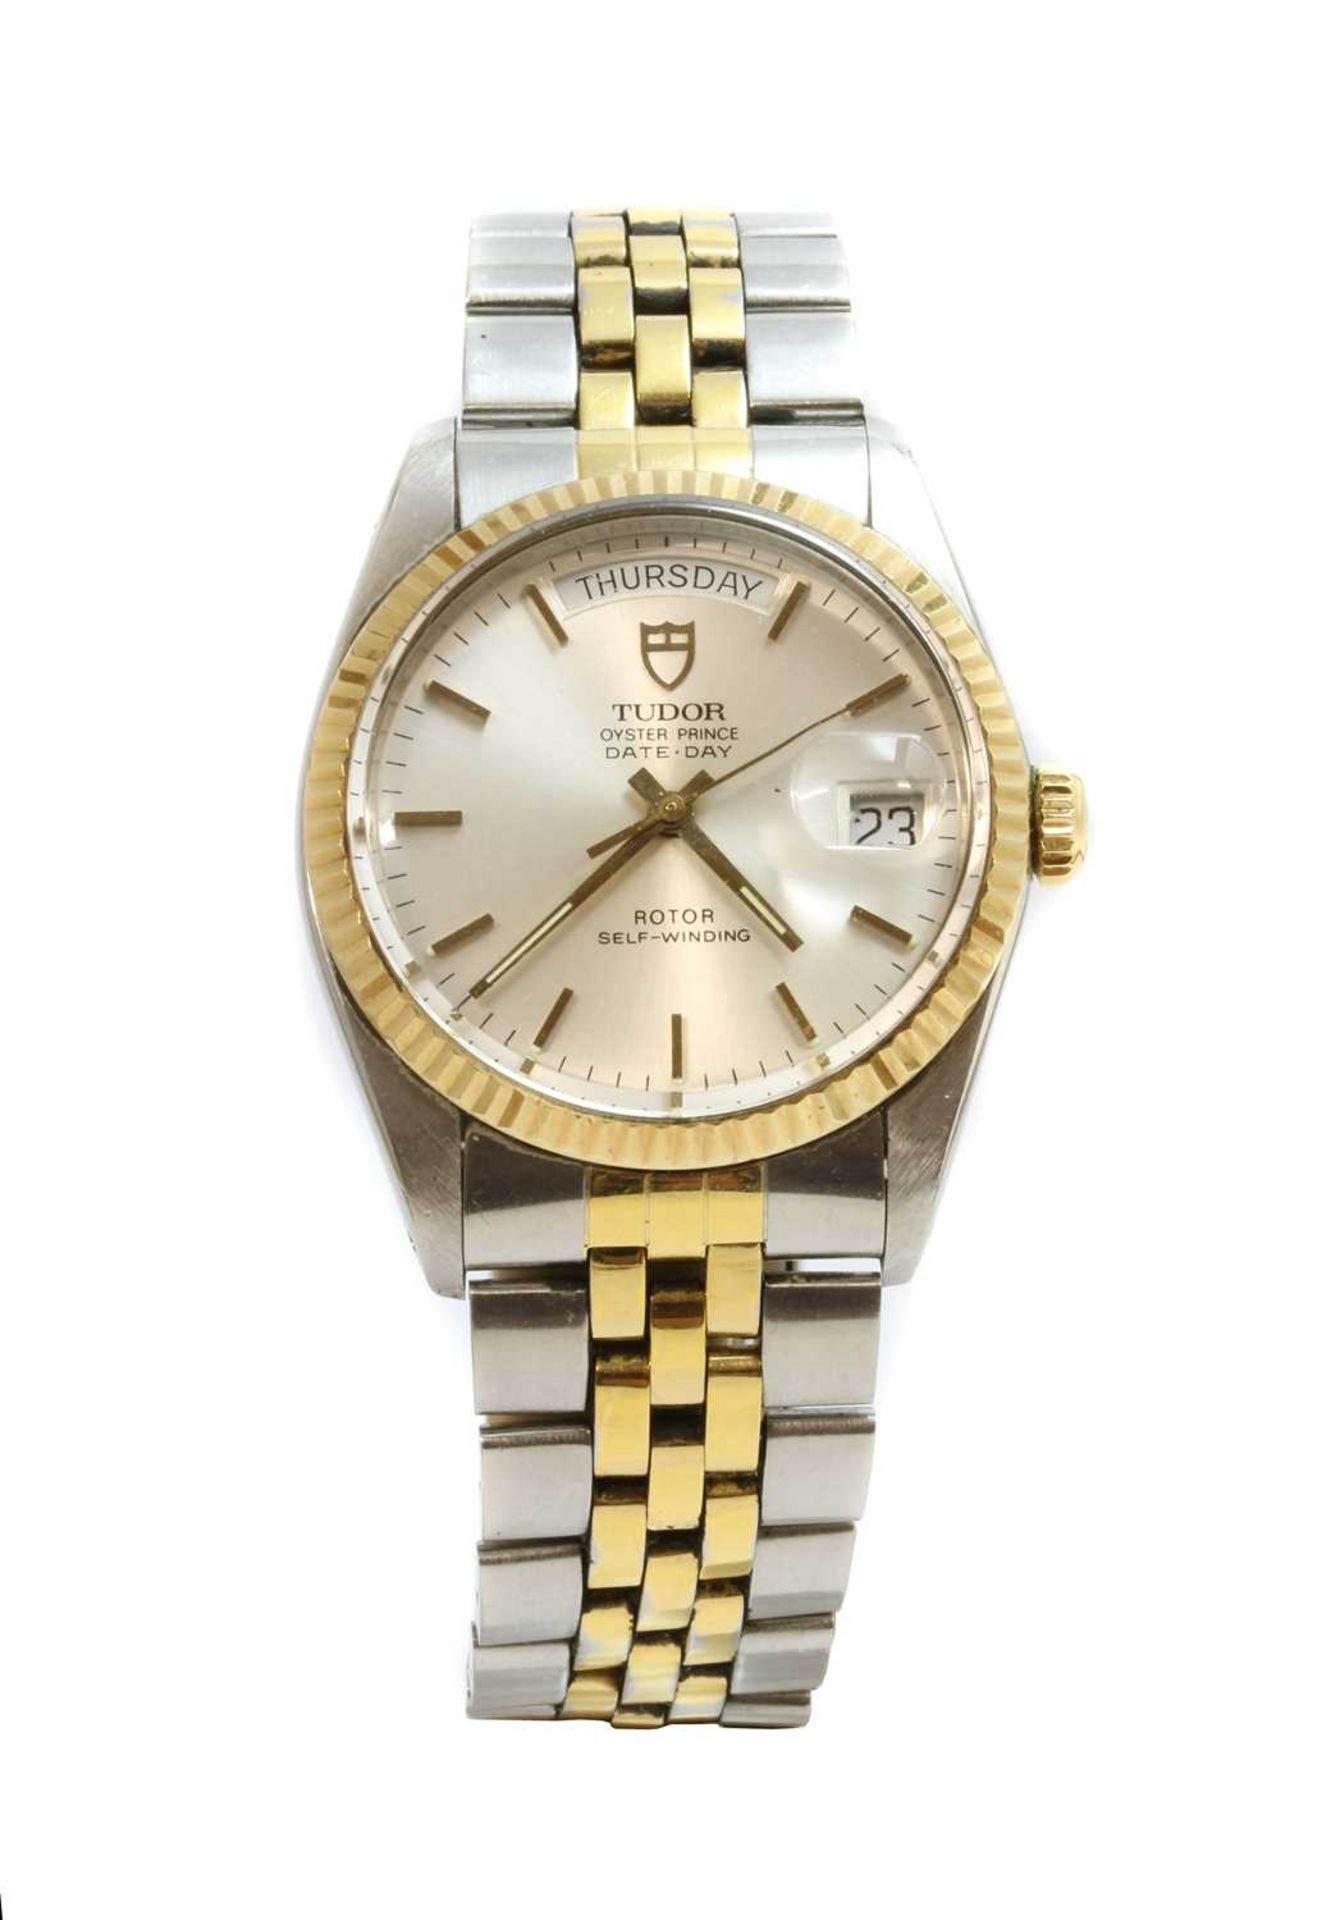 A gentlemen's bi-colour Tudor 'Oyster Prince' day date automatic bracelet watch,